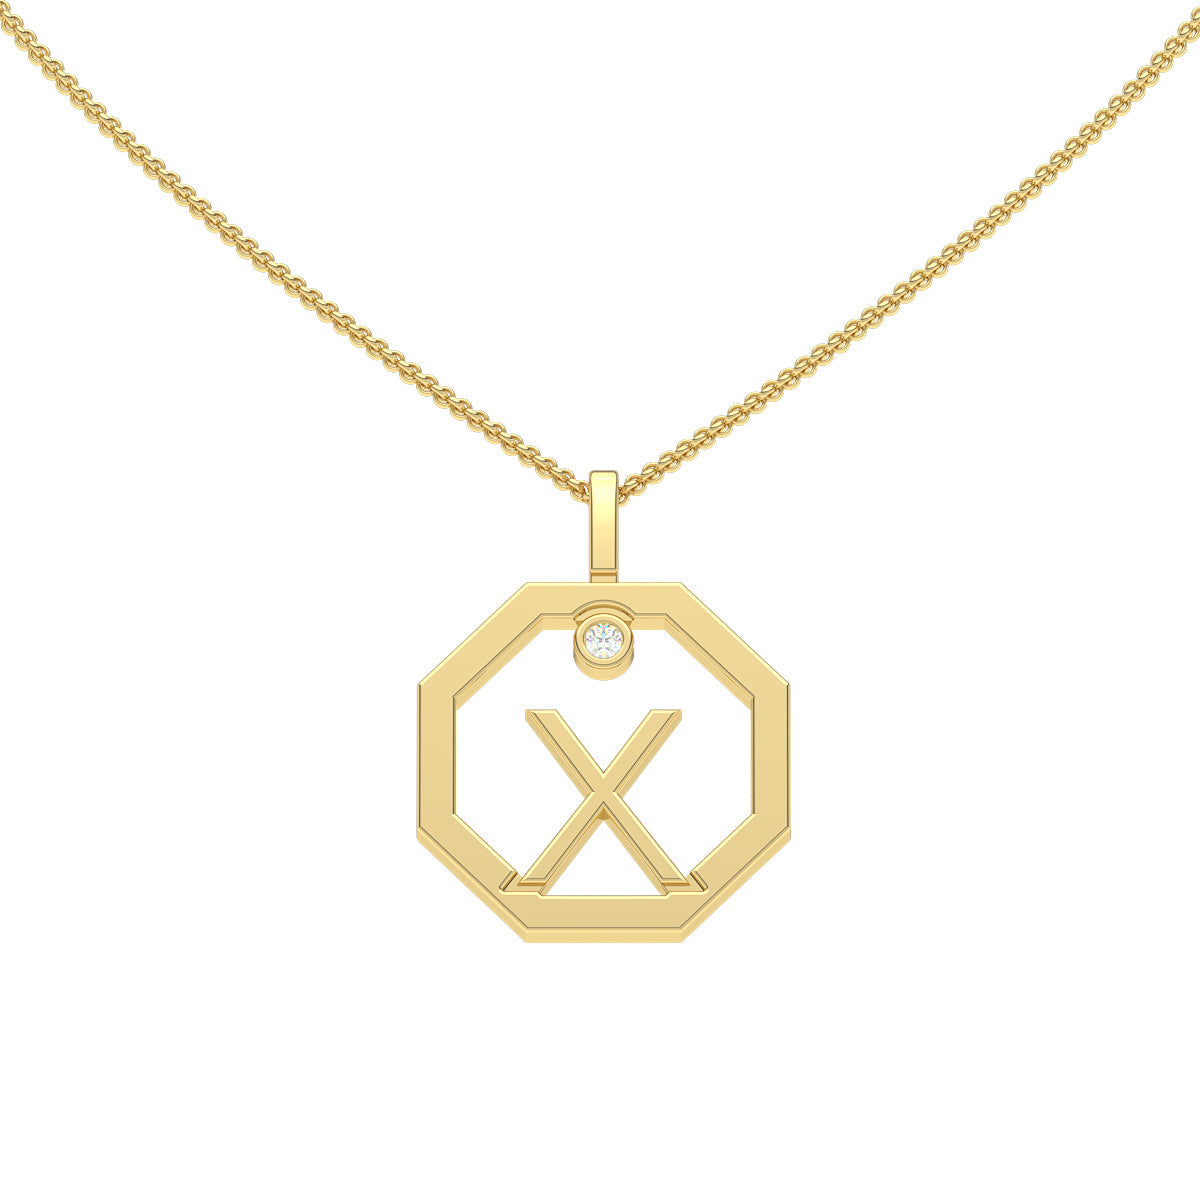 Personalised-Initial-X-diamond-yellow-gold-pendant-Lizunova-Fine-Jewels-Sydney-NSW-Australia